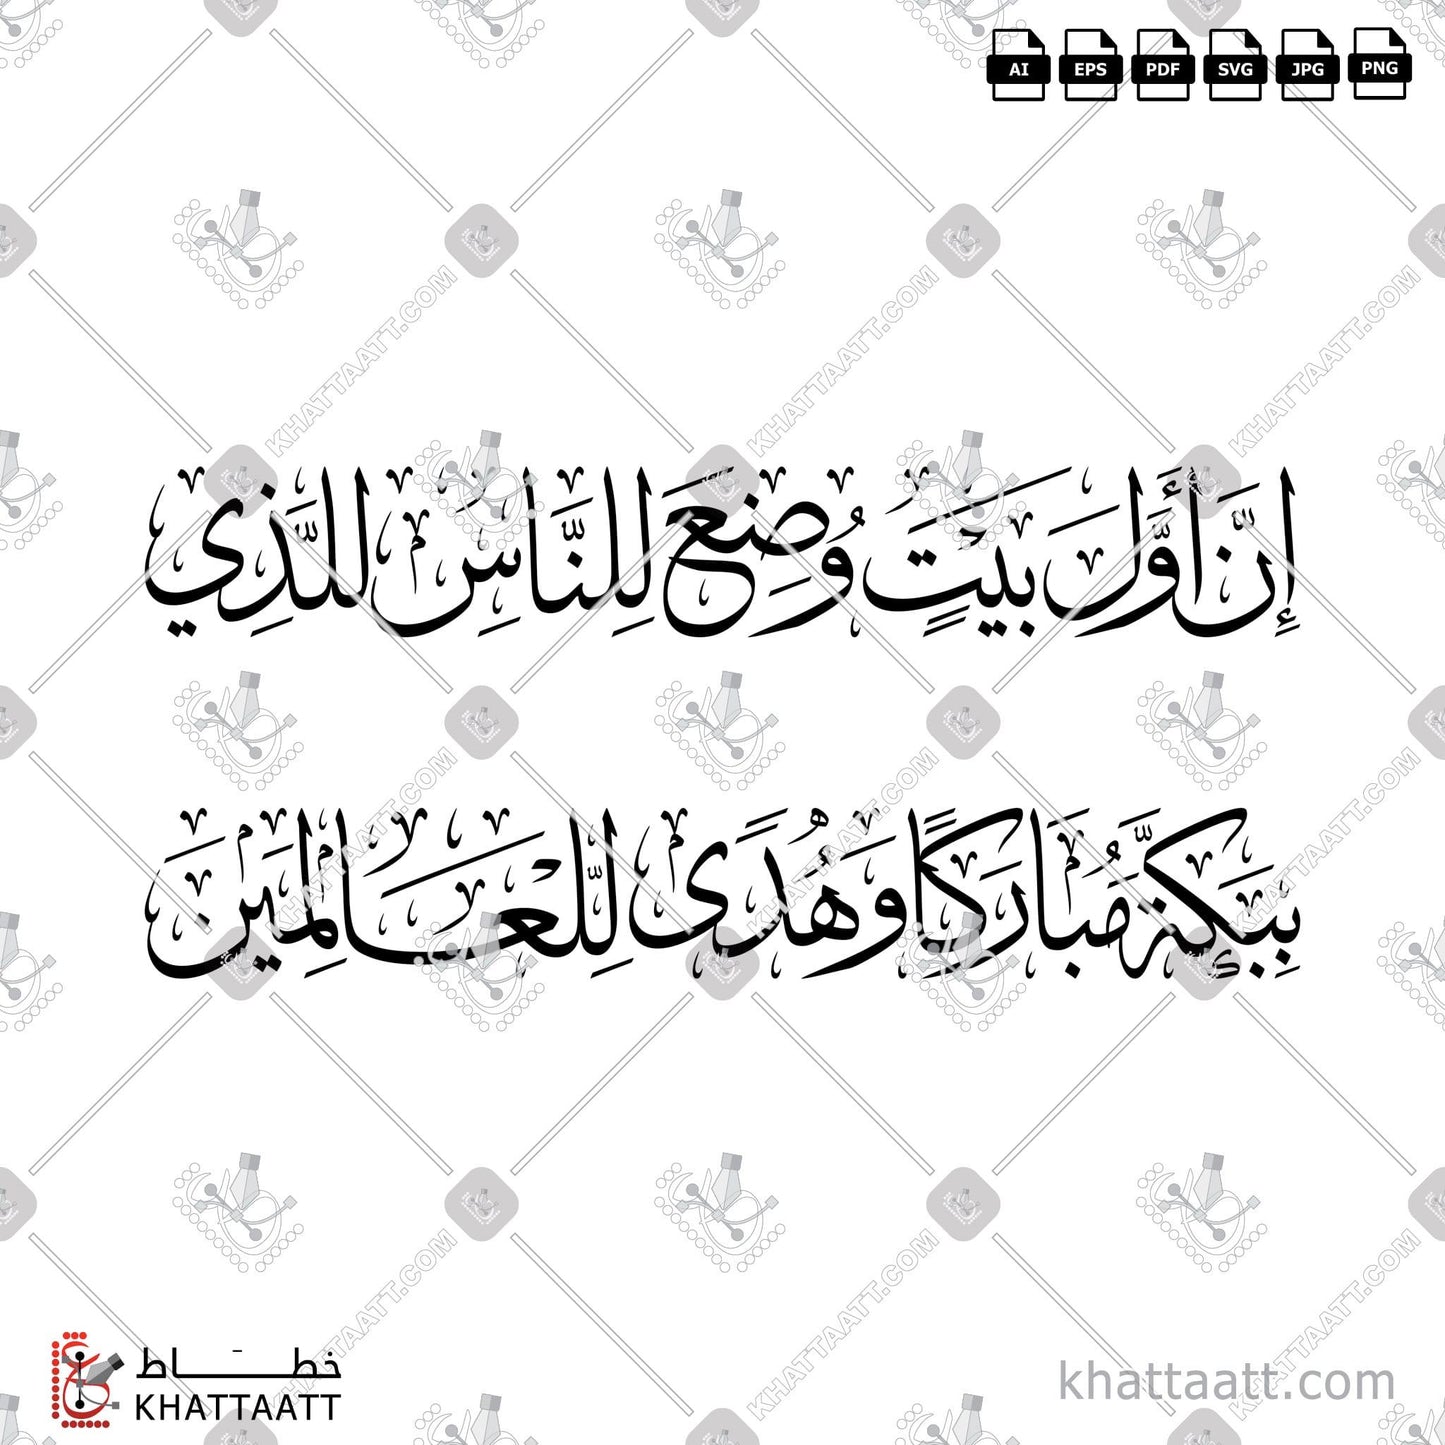 Download Arabic Calligraphy of ان اول بيت وضع للناس للذي ببكة مباركا وهدى للعالمين in Thuluth - خط الثلث in vector and .png